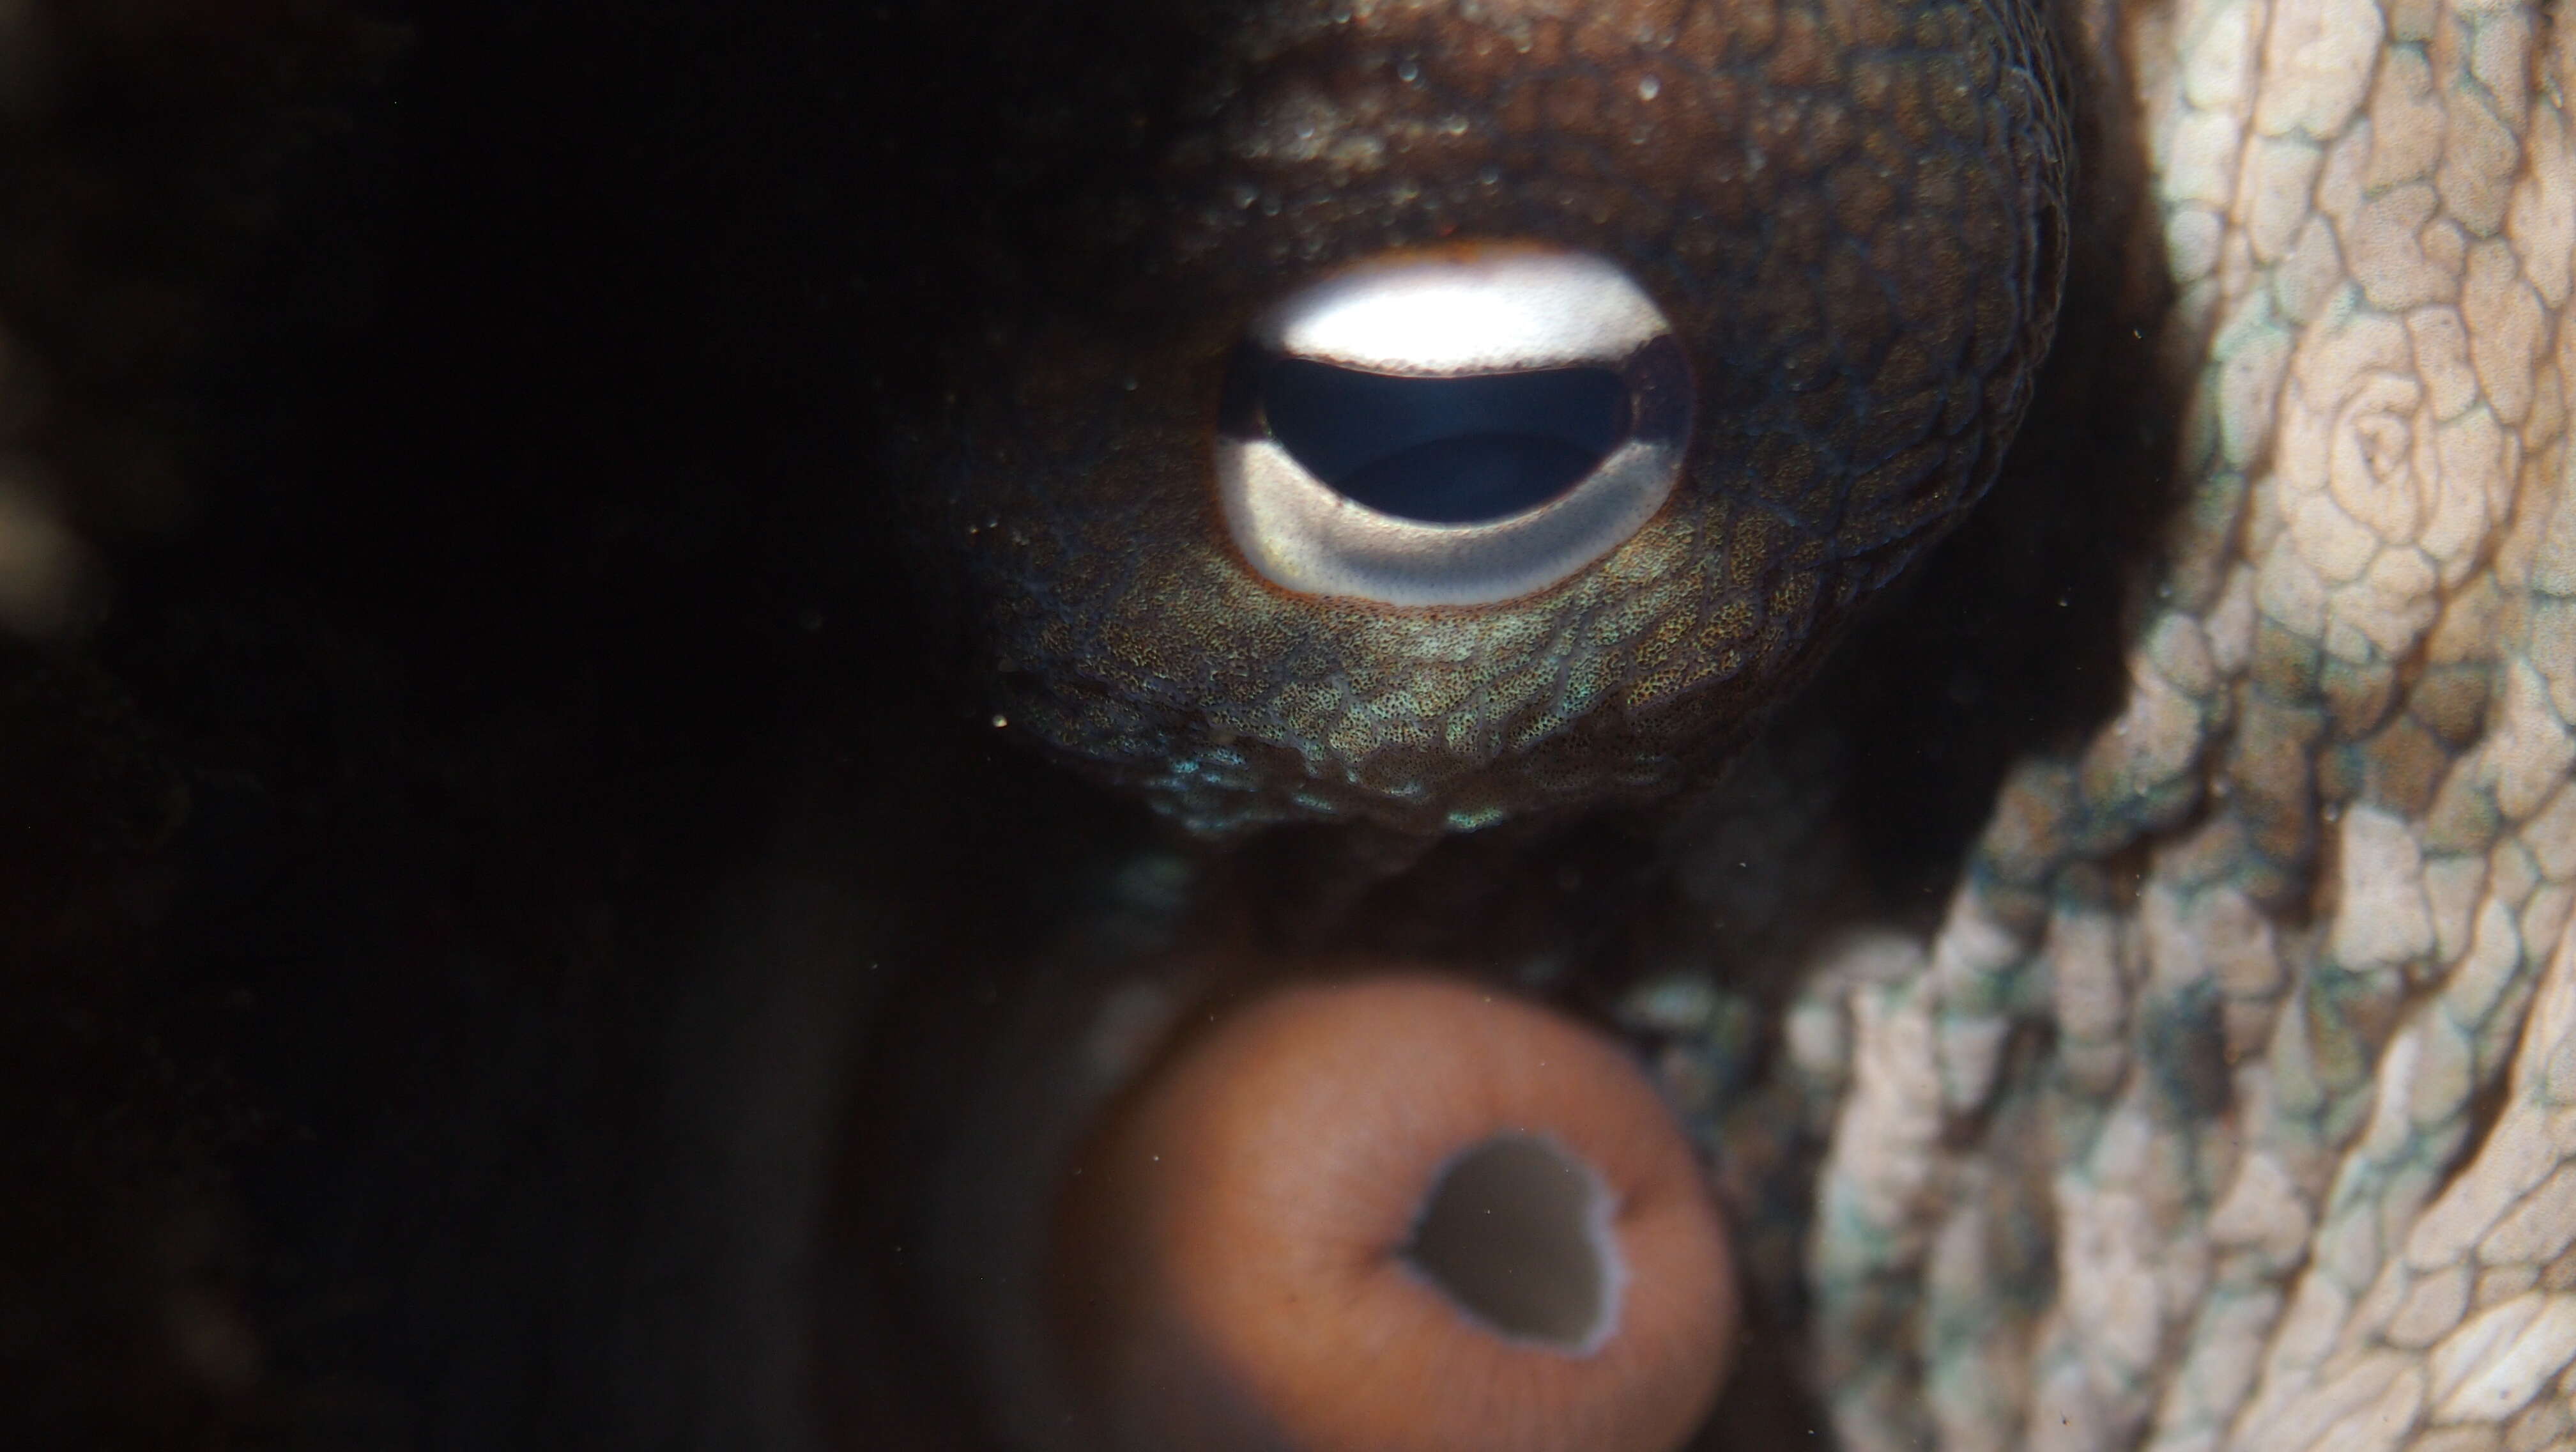 Image of Sydney octopus